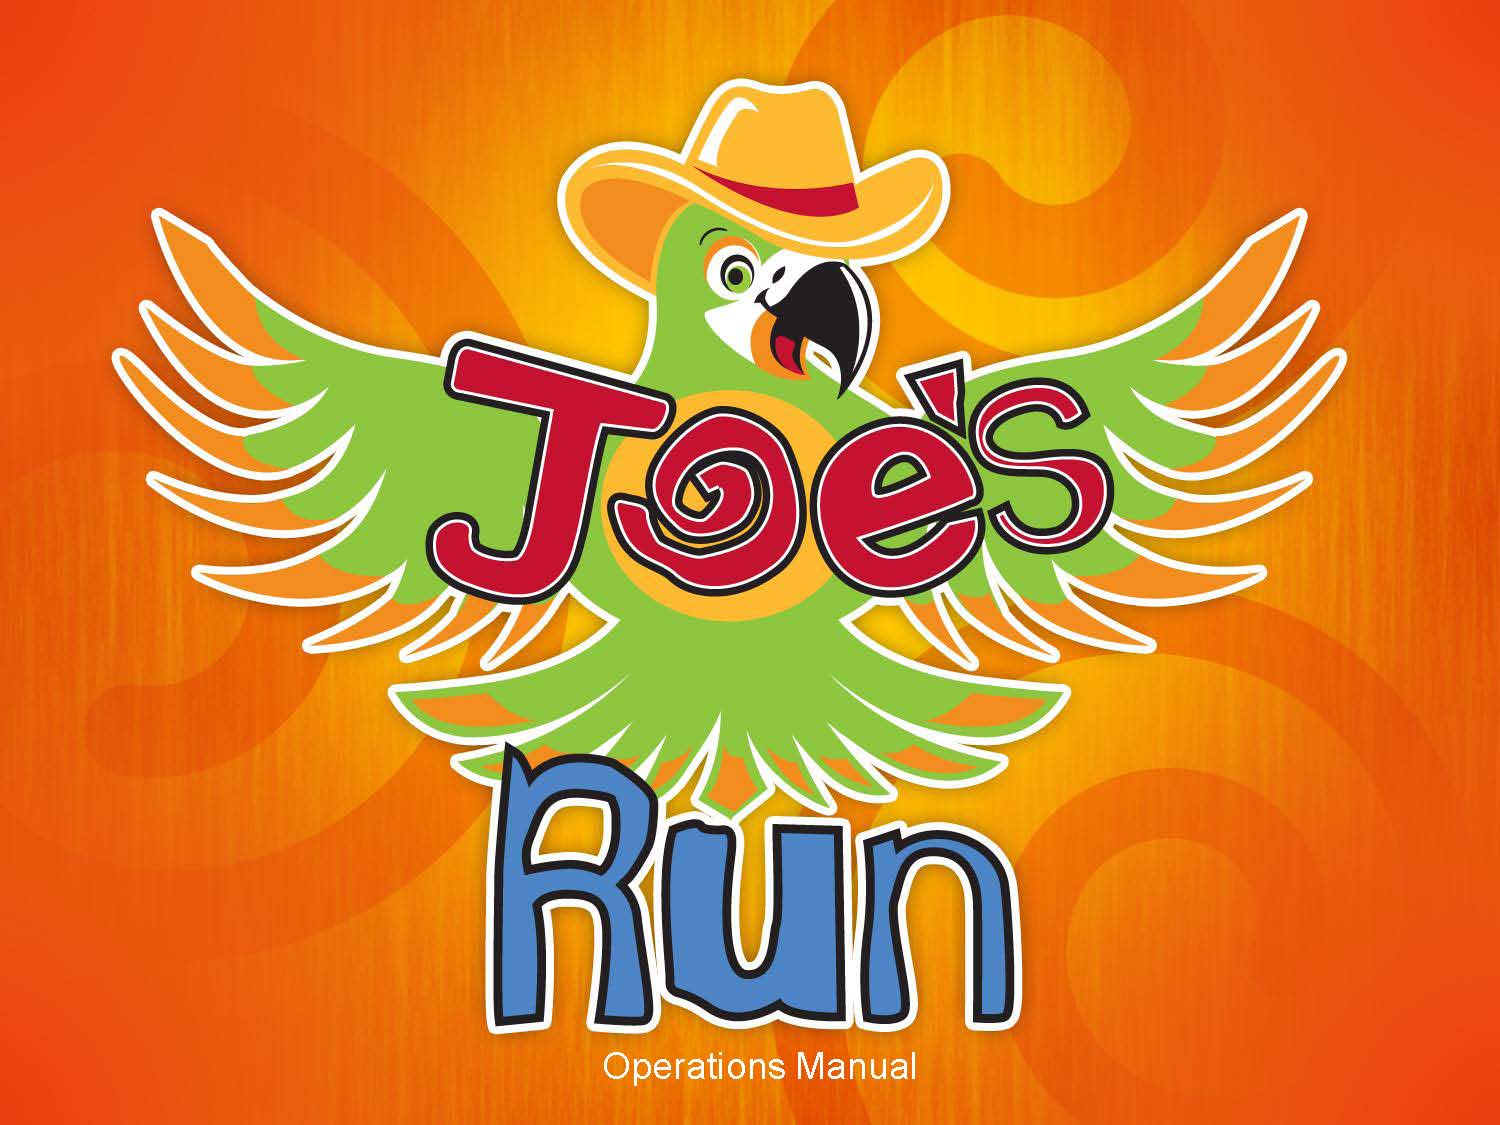 Joe's Run 5K searchable